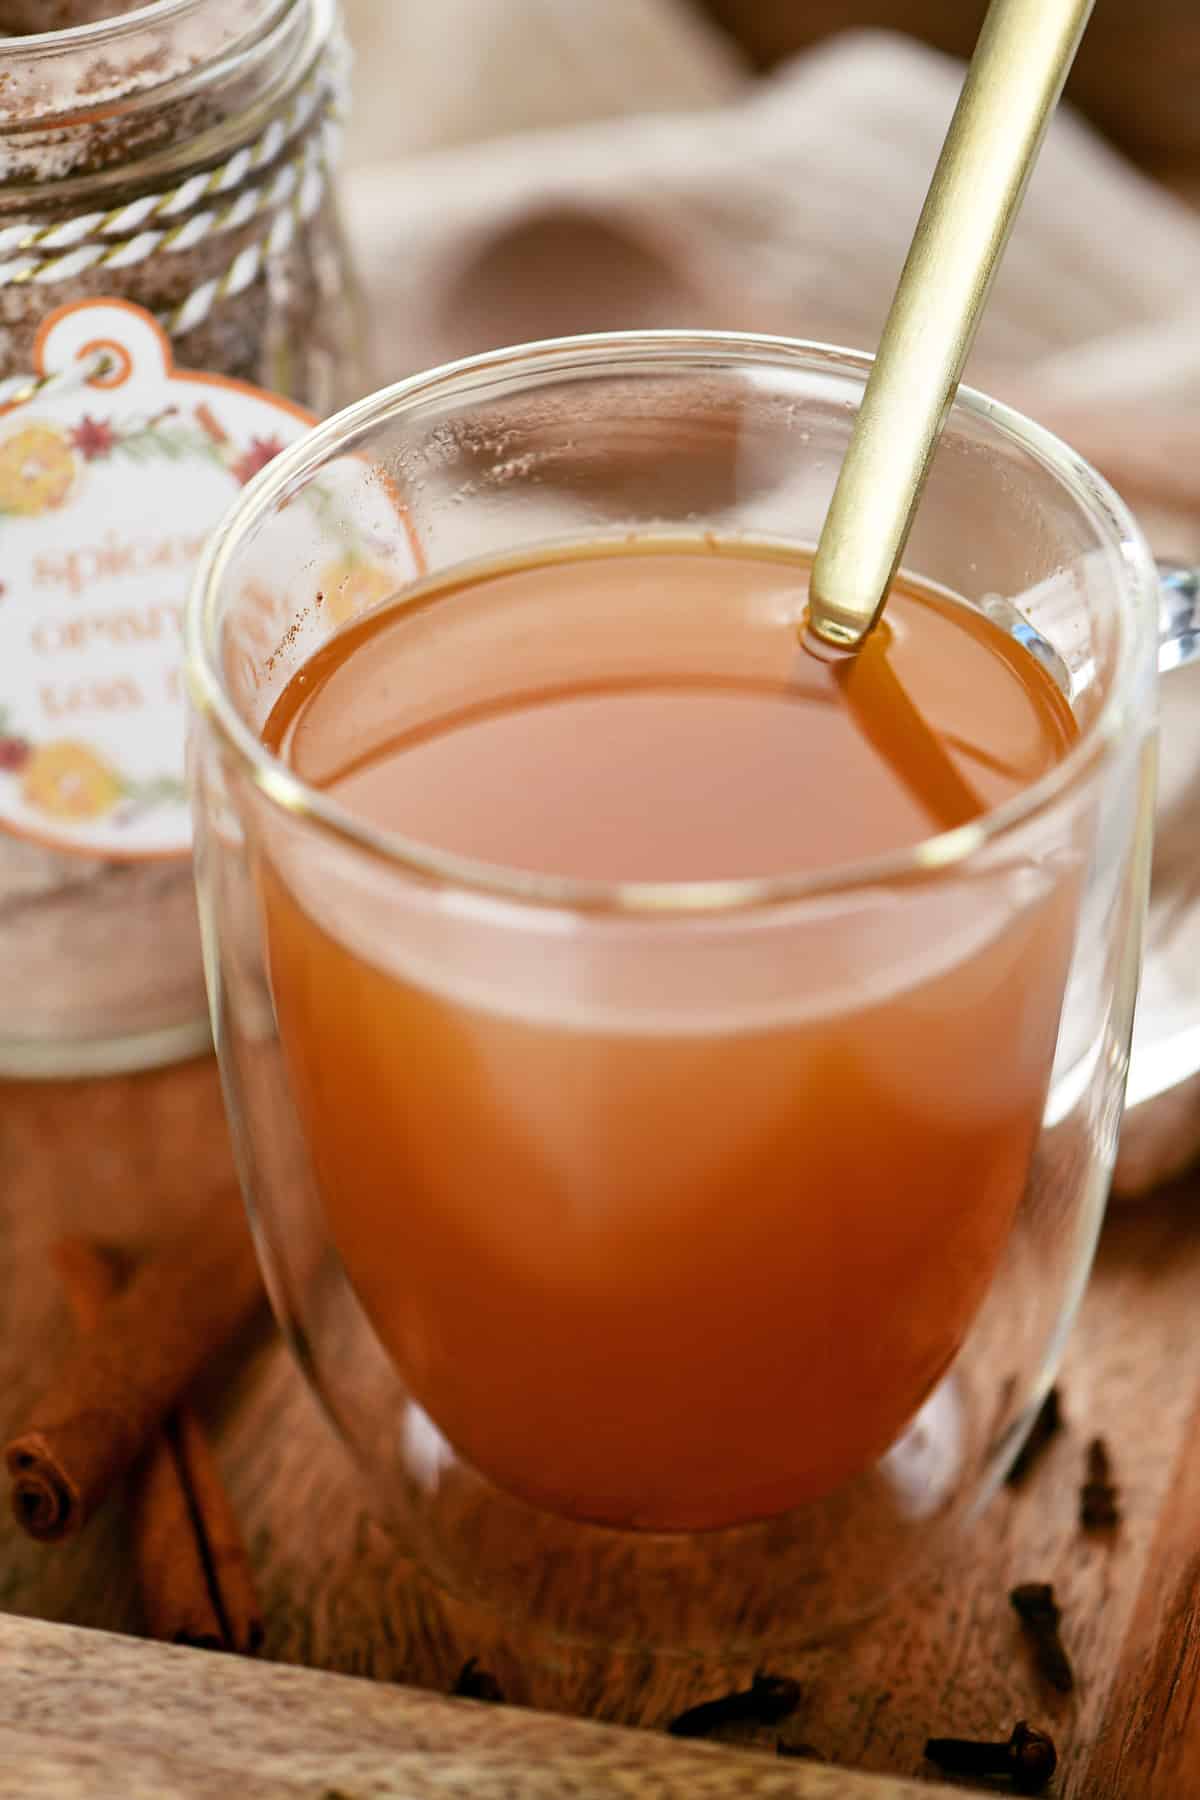 A mug with an orange liquid and a gold spoon.